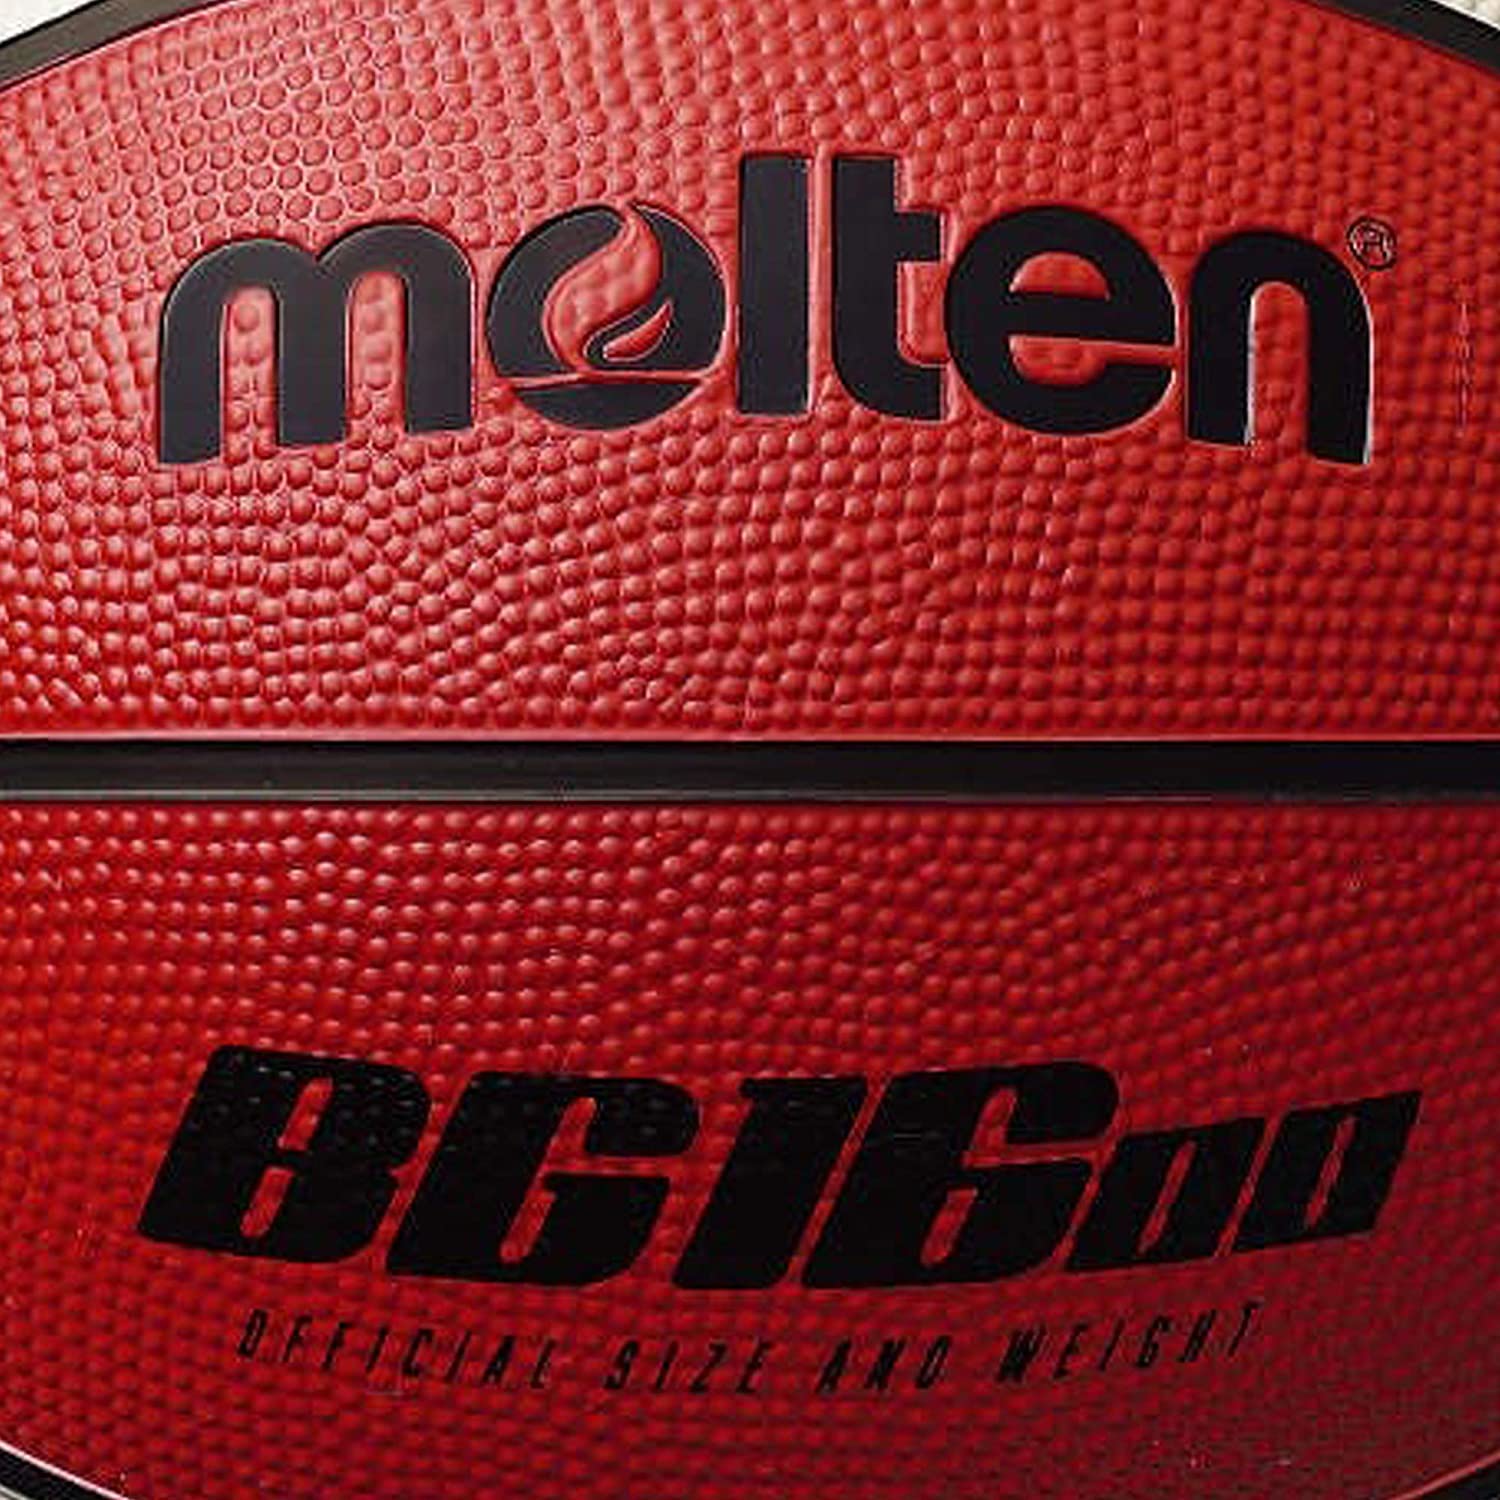 Ballons de basket BG1600 T7